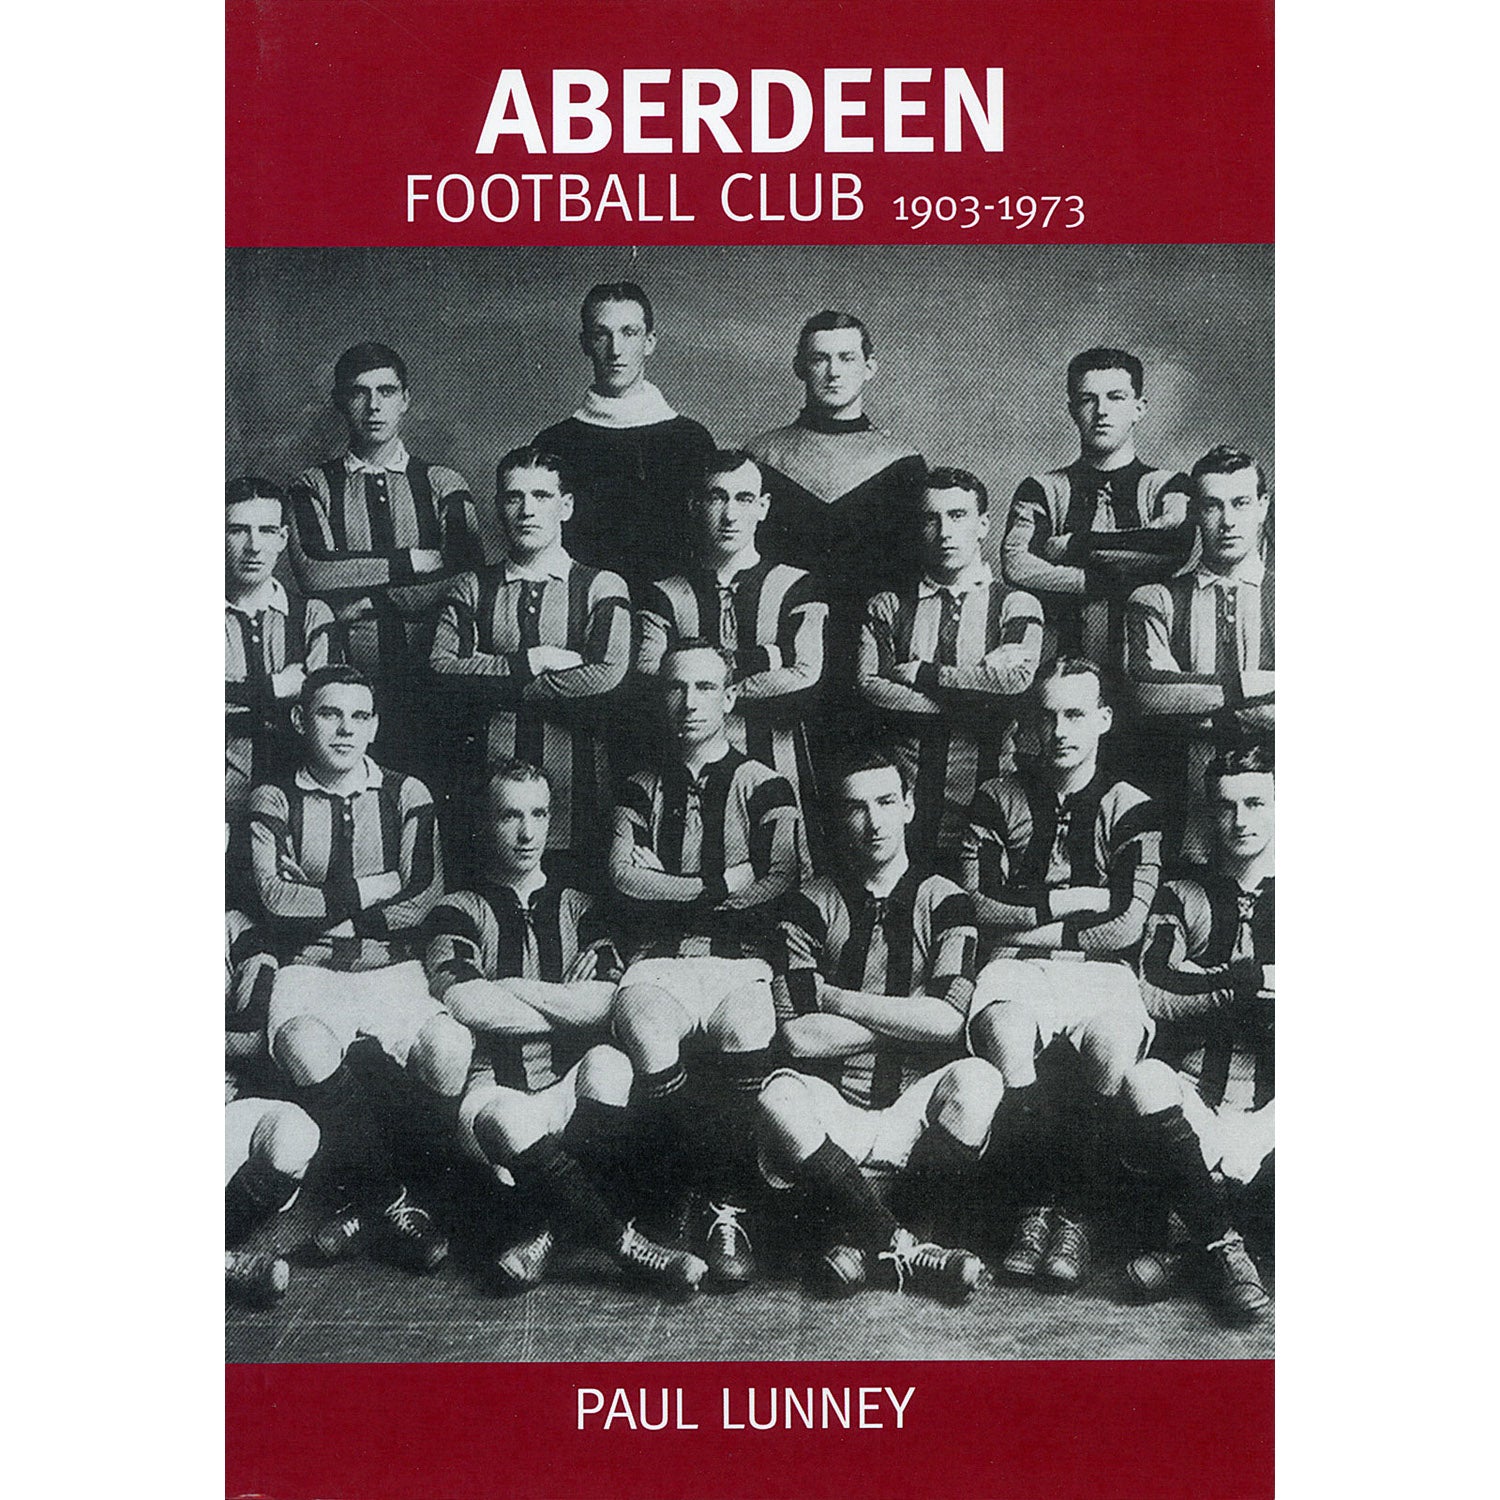 Images of Sport – Aberdeen Football Club 1903-1973